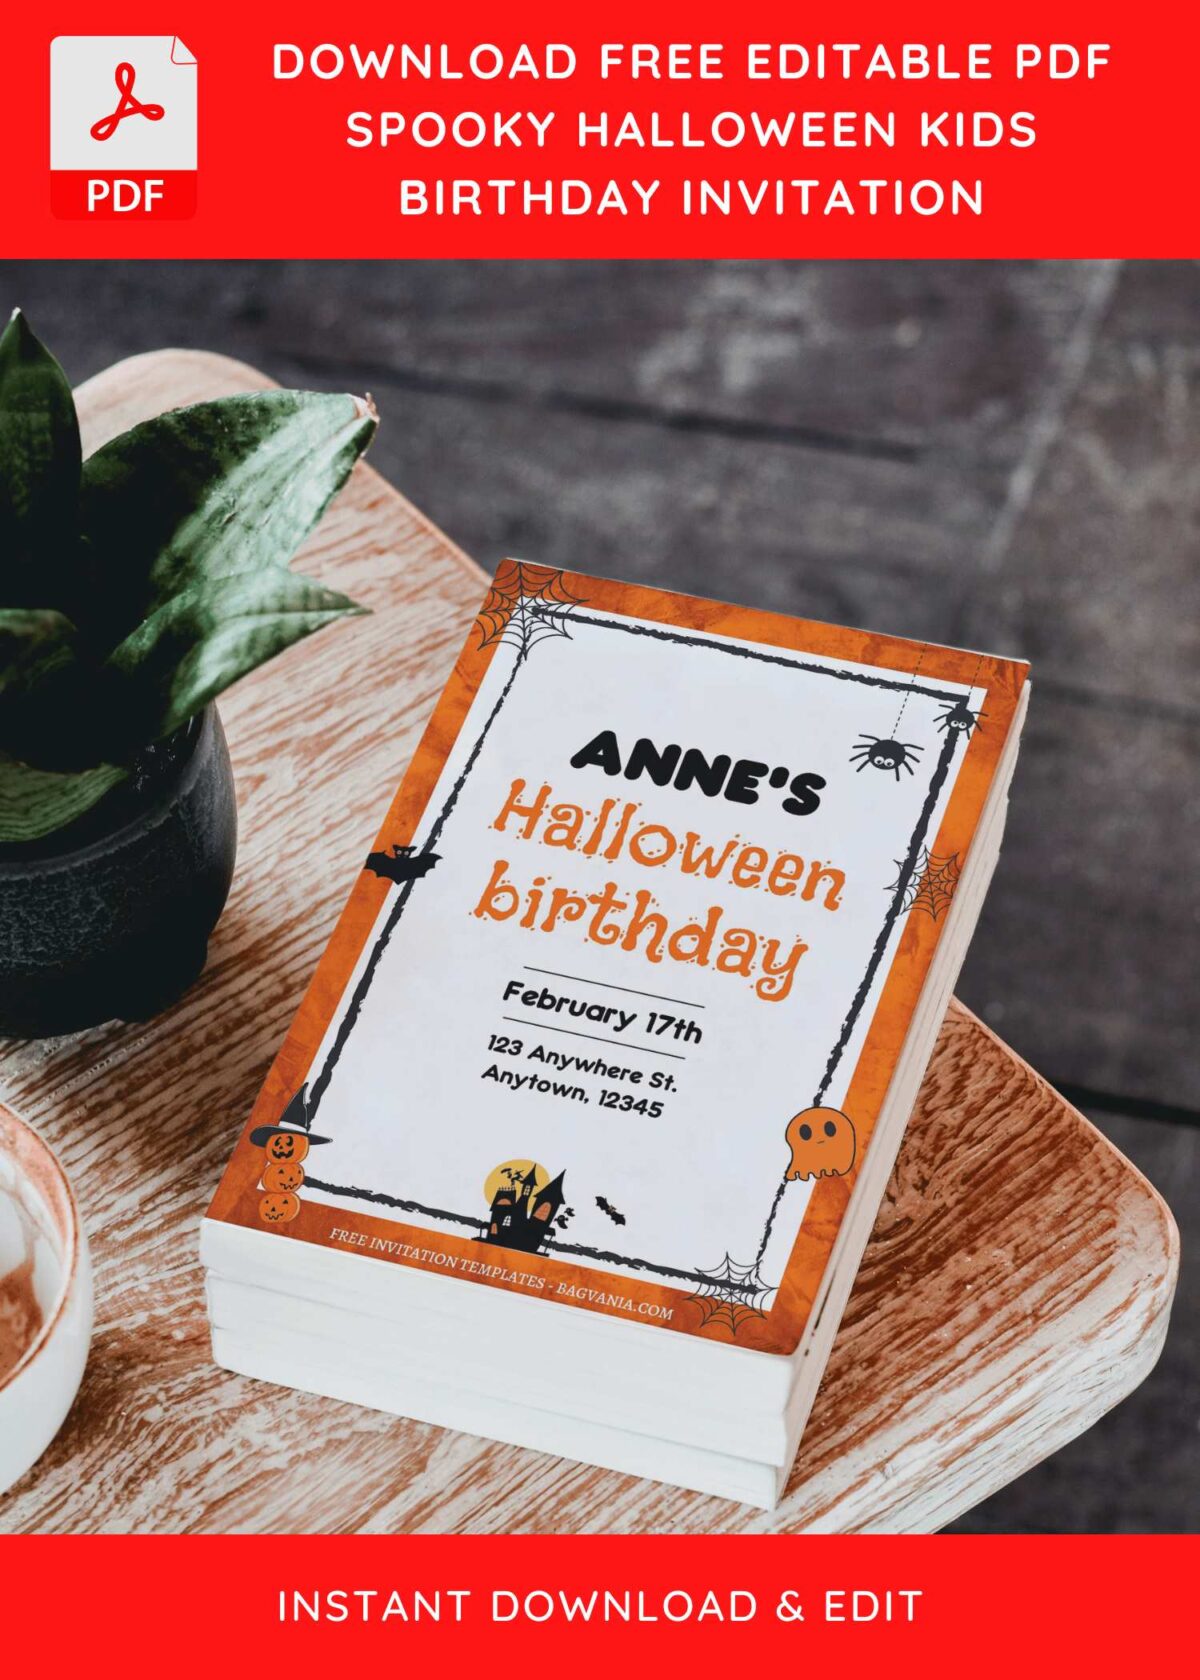 (Free Editable PDF) Spooky Halloween Kids Birthday Invitation Templates D